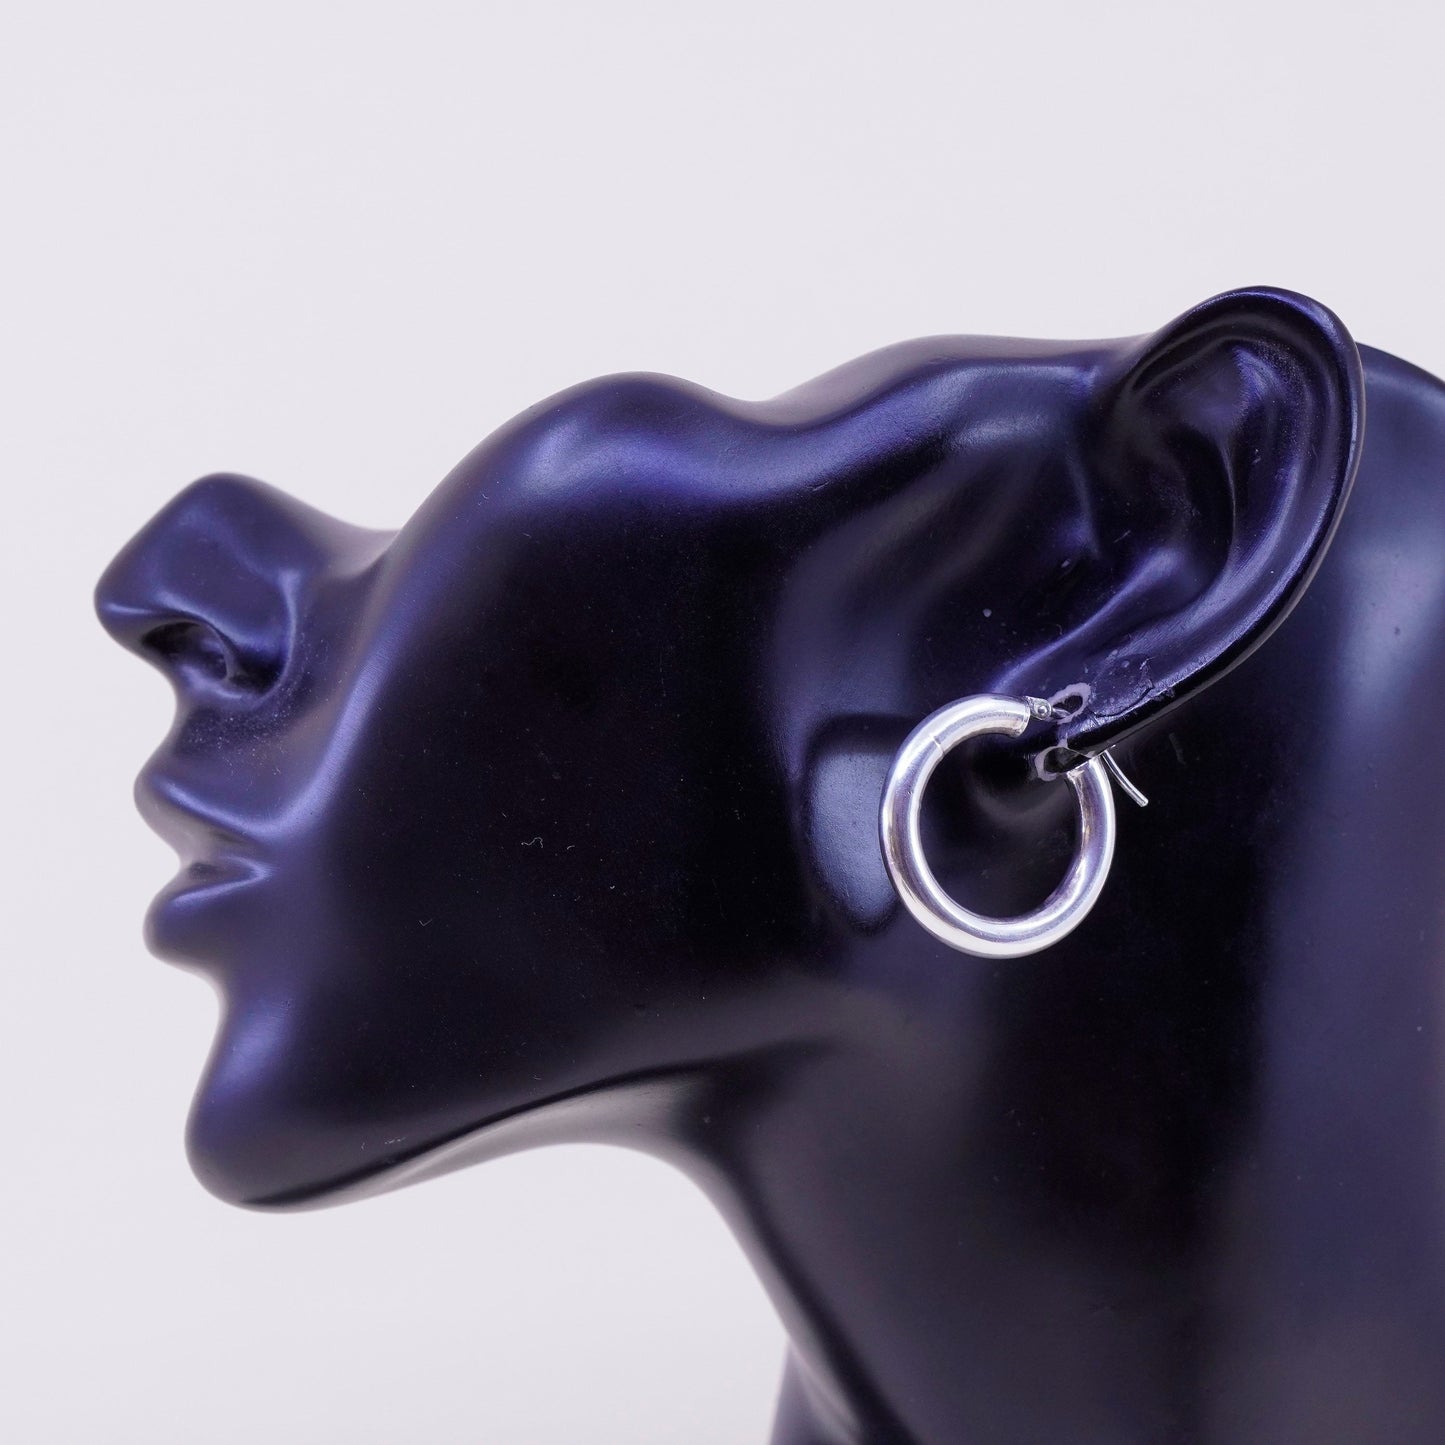 1” Vintage sterling 925 silver earrings, fashion minimalist primitive hoops